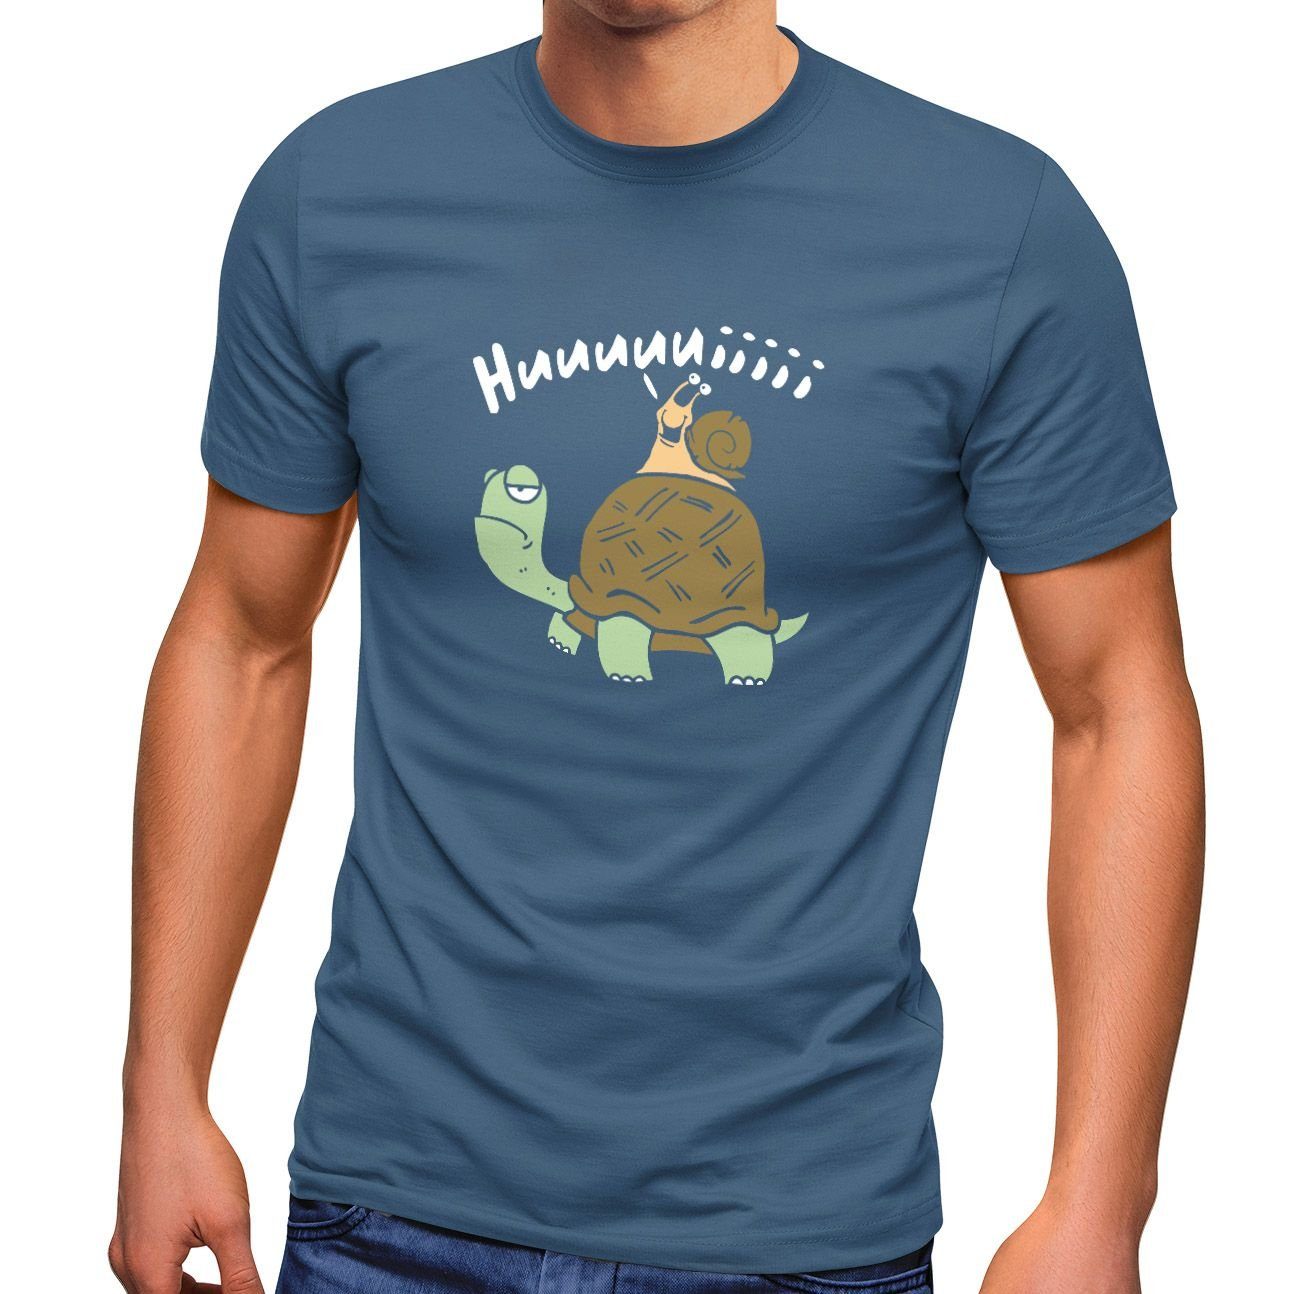 Print-Shirt Huuuuiiii blau Fun-Shirt Herren Schnecke Scherz Moonworks® Schildkröte lustig Spruch Print Comic Witzig T-Shirt mit Lustig MoonWorks